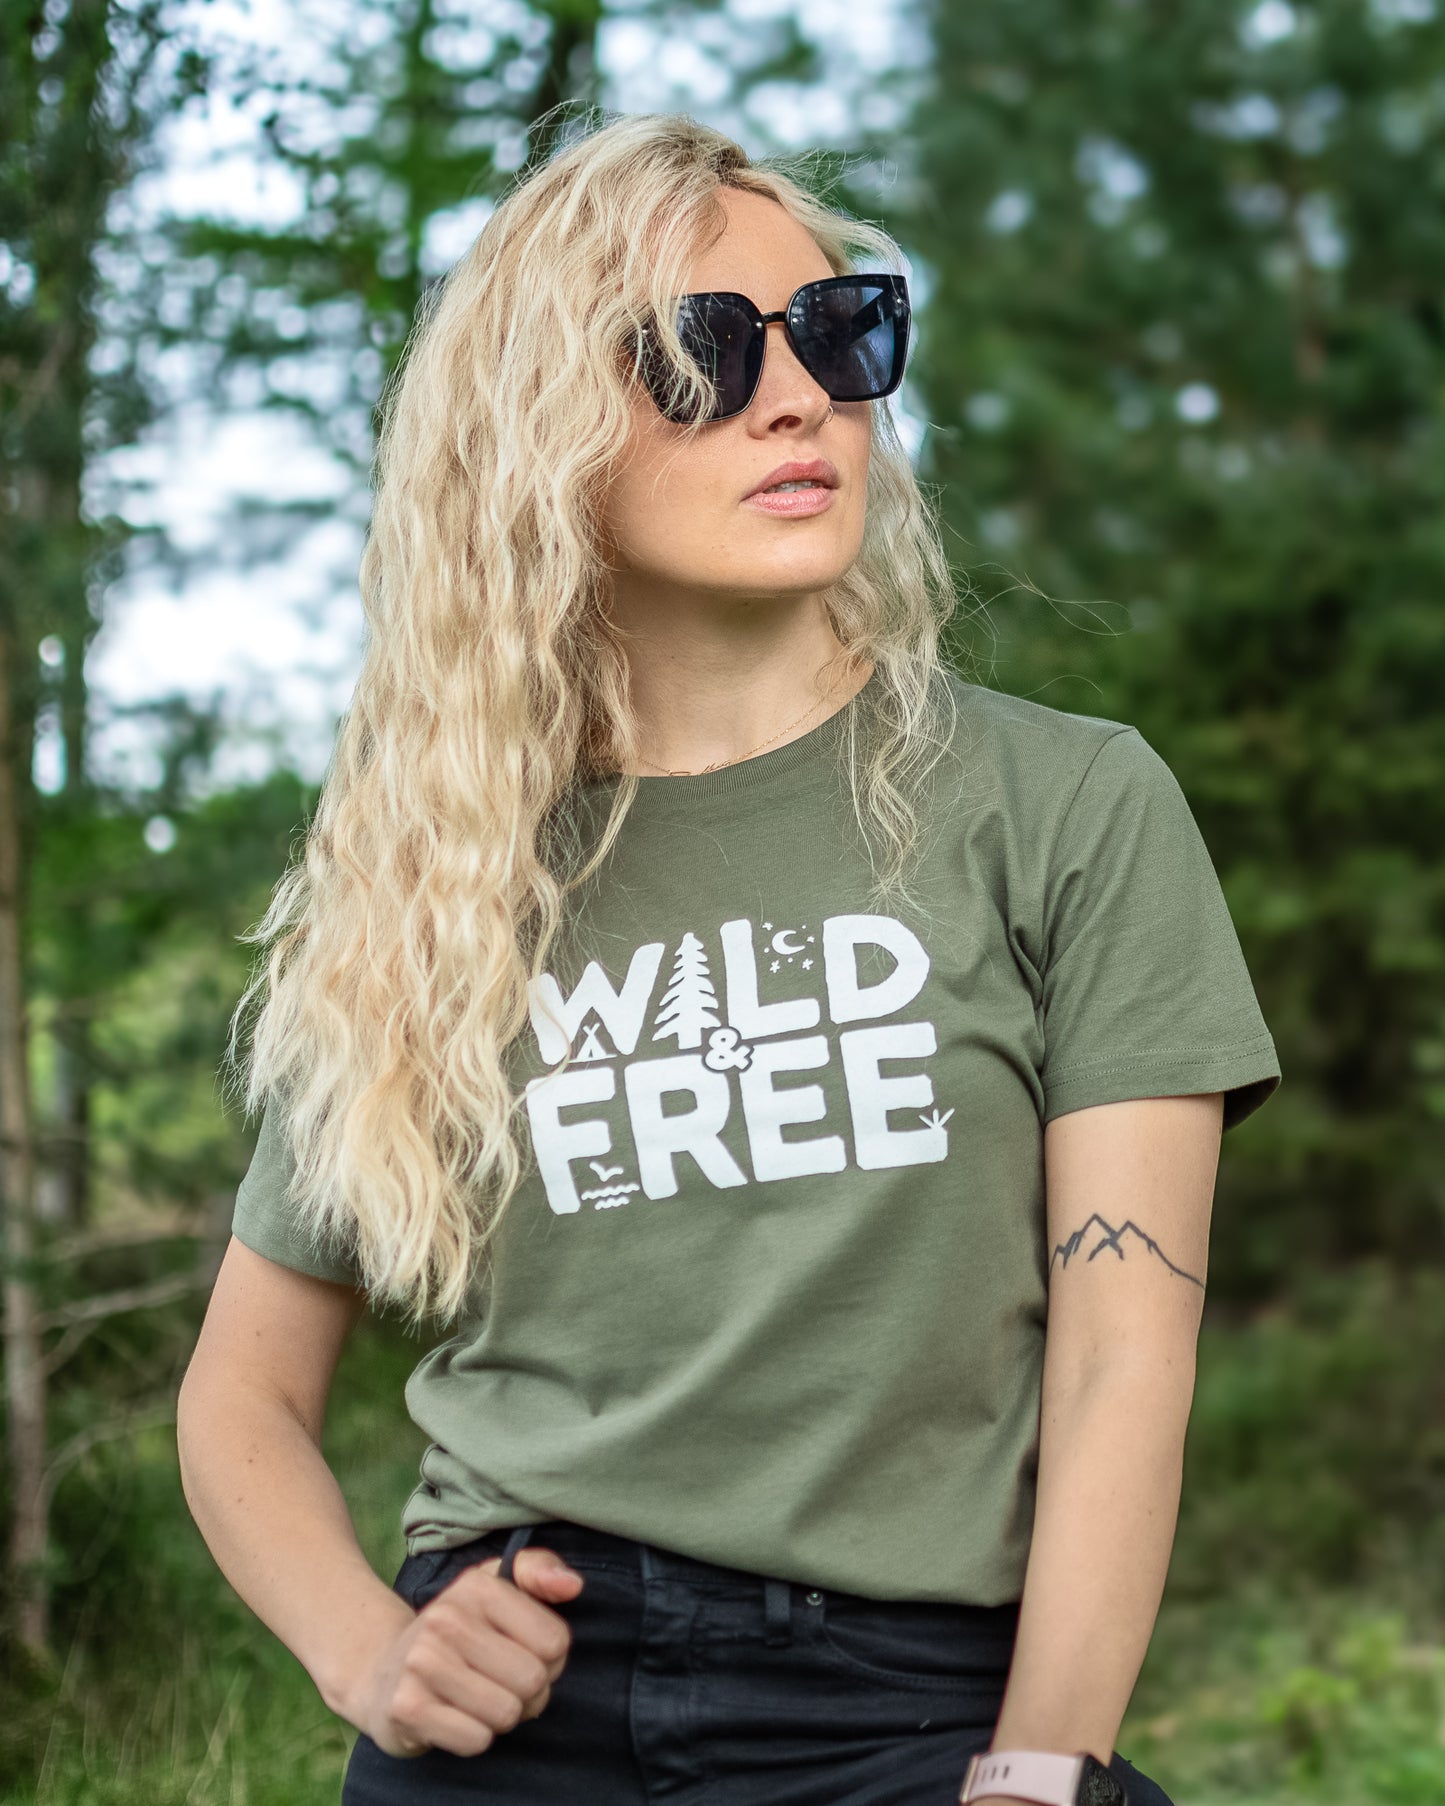 'Wild & Free' T-shirt in Khaki